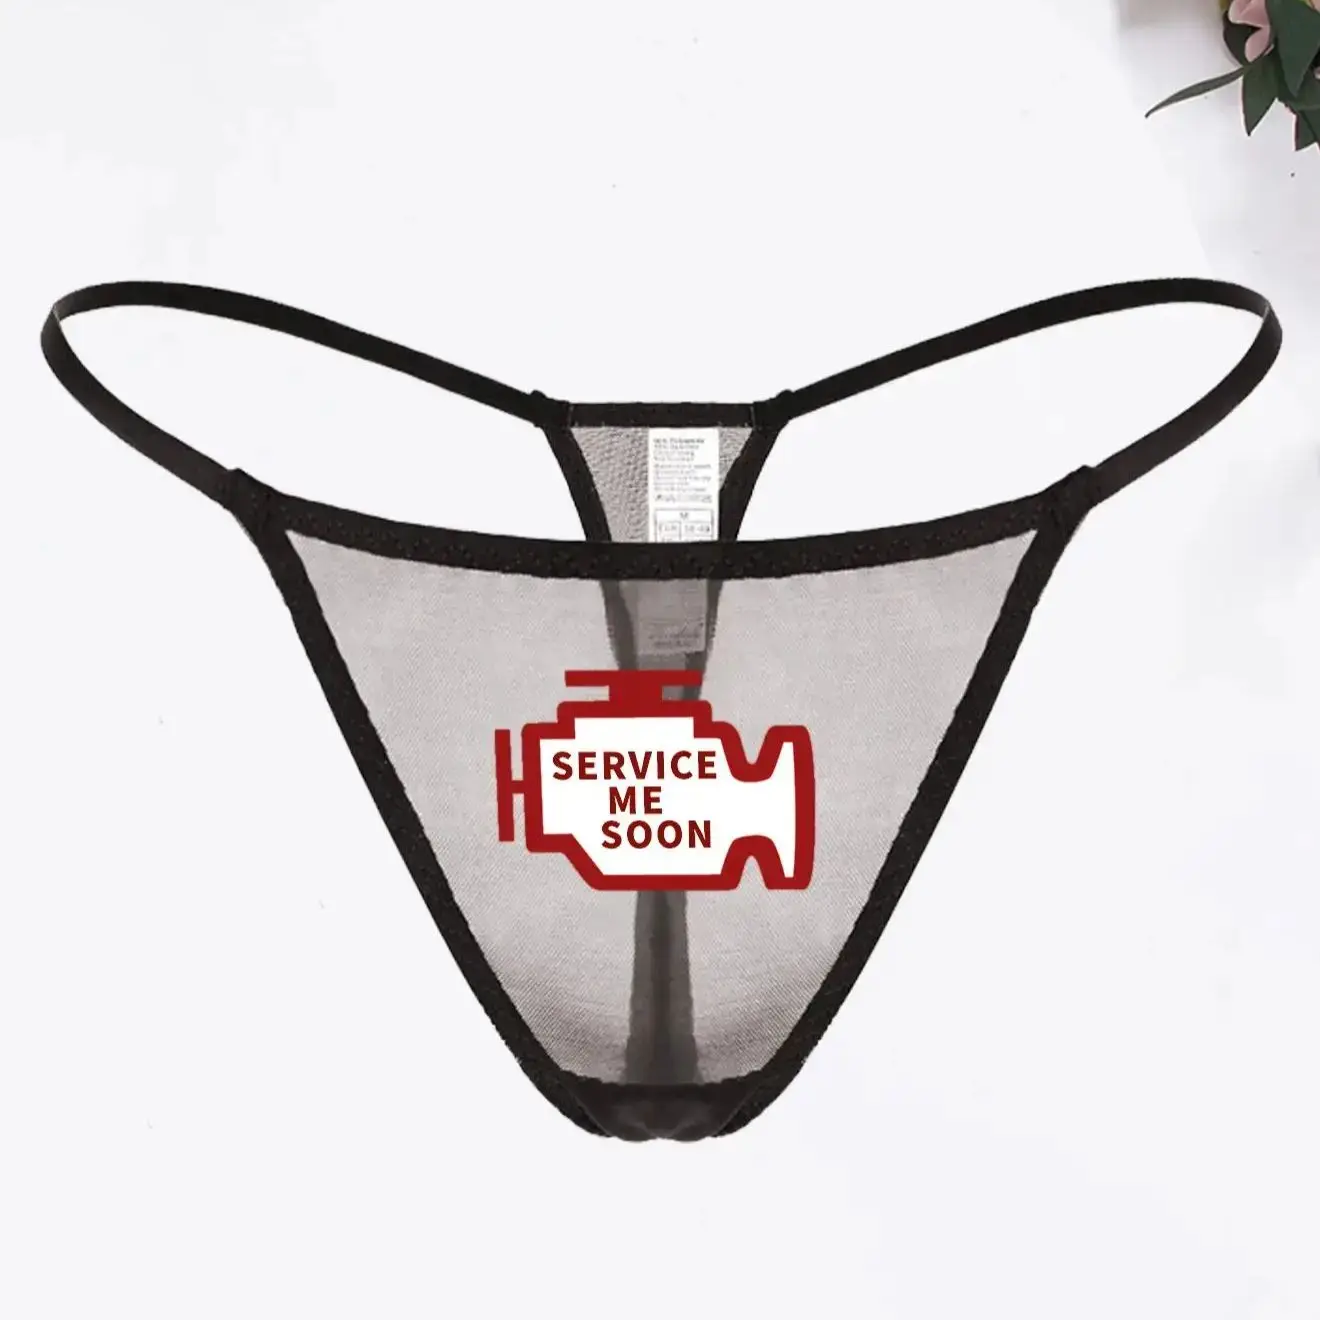 Donne G String mutandine con stampa Sexy vita bassa perizoma in rete trasparente mutande femminili biancheria intima trasparente 1 pz